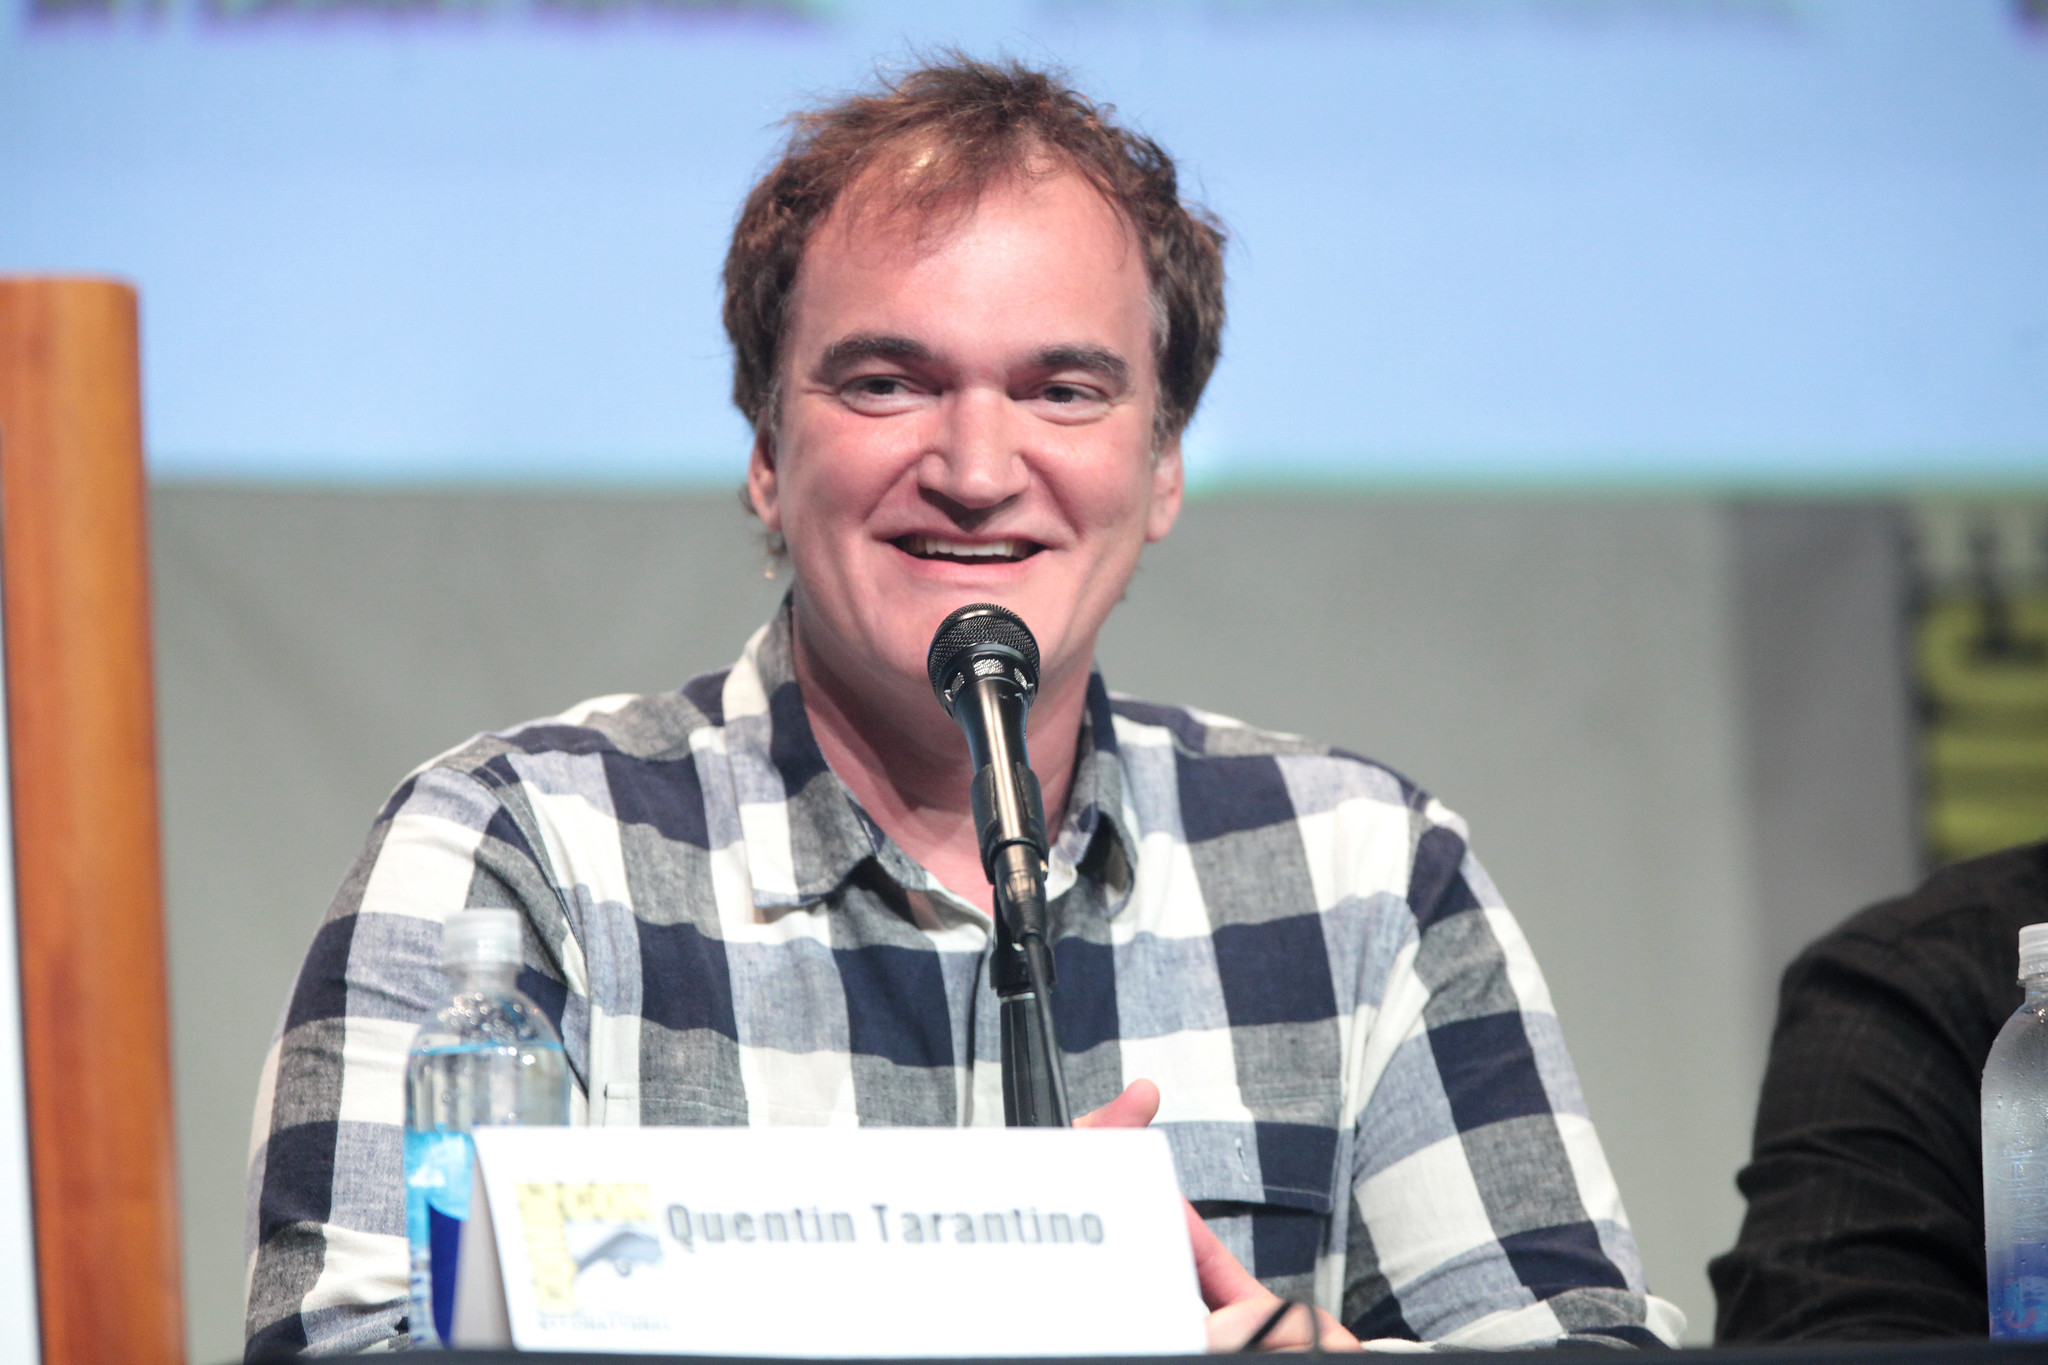 Quentin Tarantino's retirement